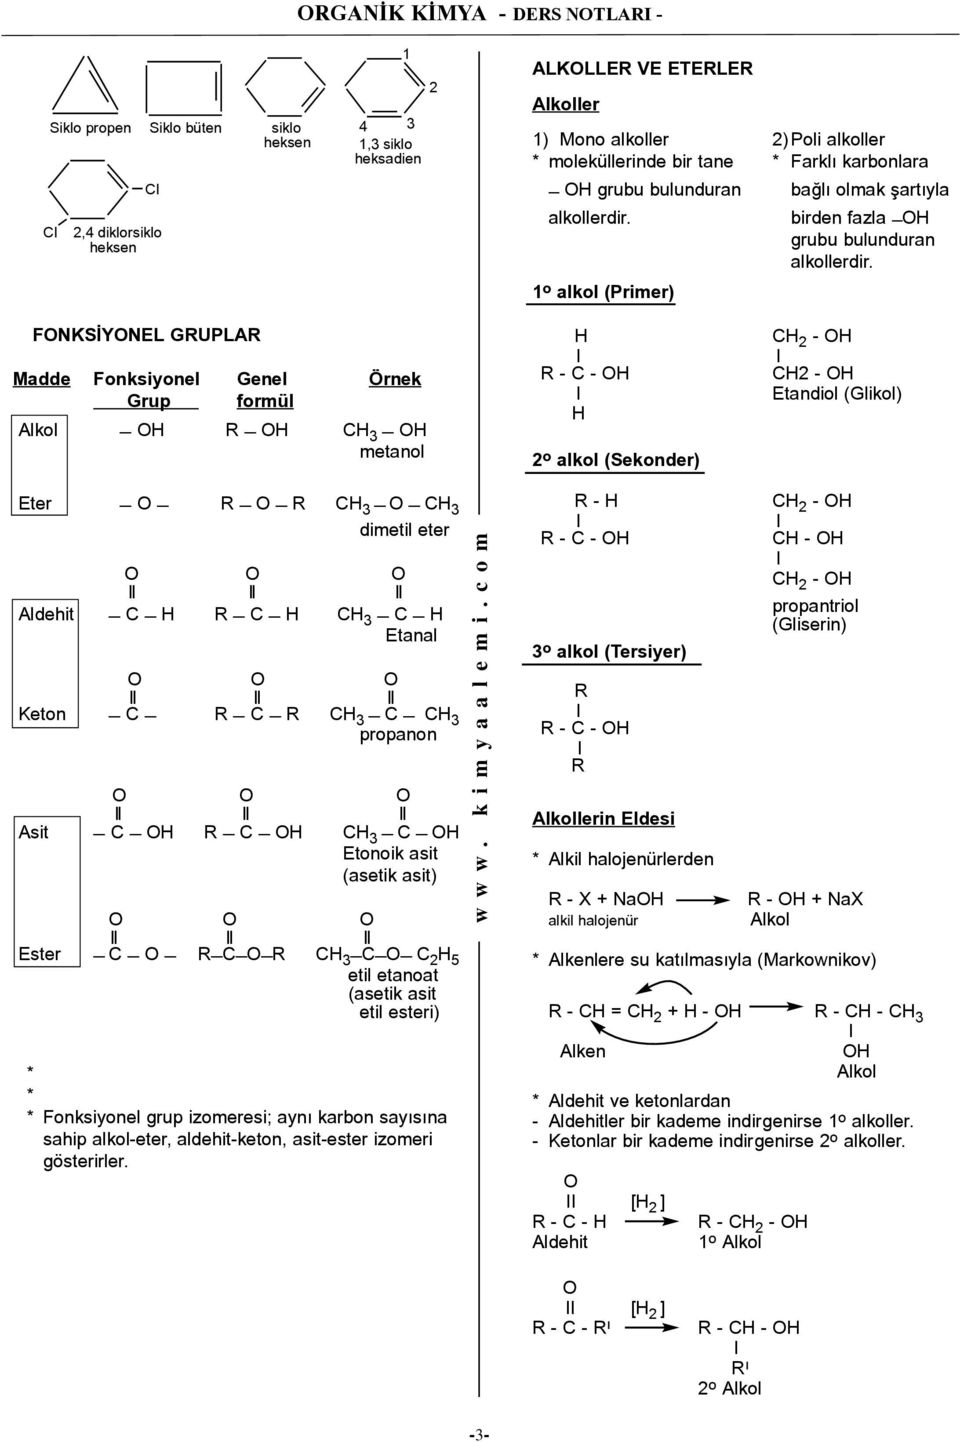 FNKSİYNEL GUPLA Madde Fonksiyonel Genel Örnek Grup formül Alkol 3 _ metanol - - 2 o alkol (Sekonder) 2-2 - Etandiol (Glikol) Eter _ 3 _ 3 dimetil eter 3 Etanal Keton 3 3 propanon Asit 3 Etonoik asit